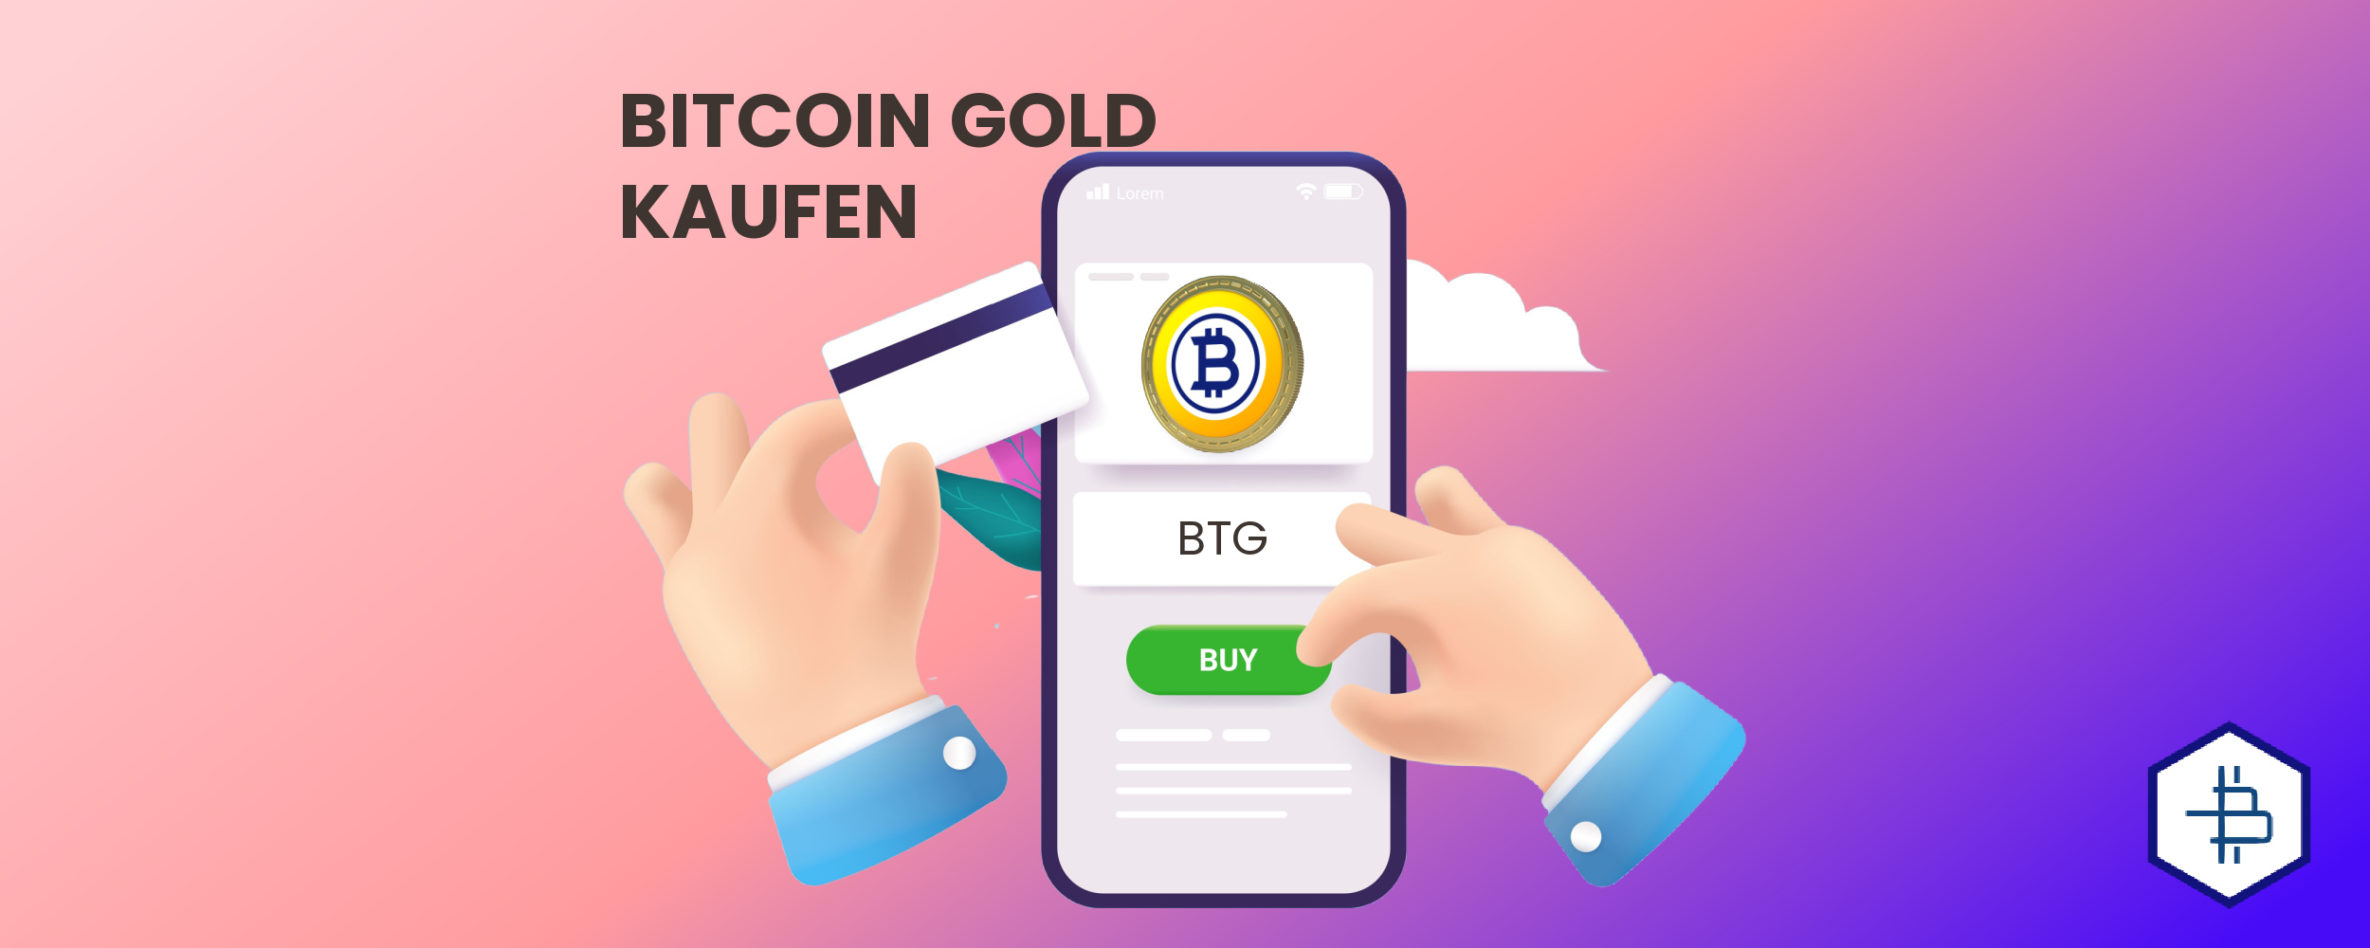 Bitcoin Gold kaufen